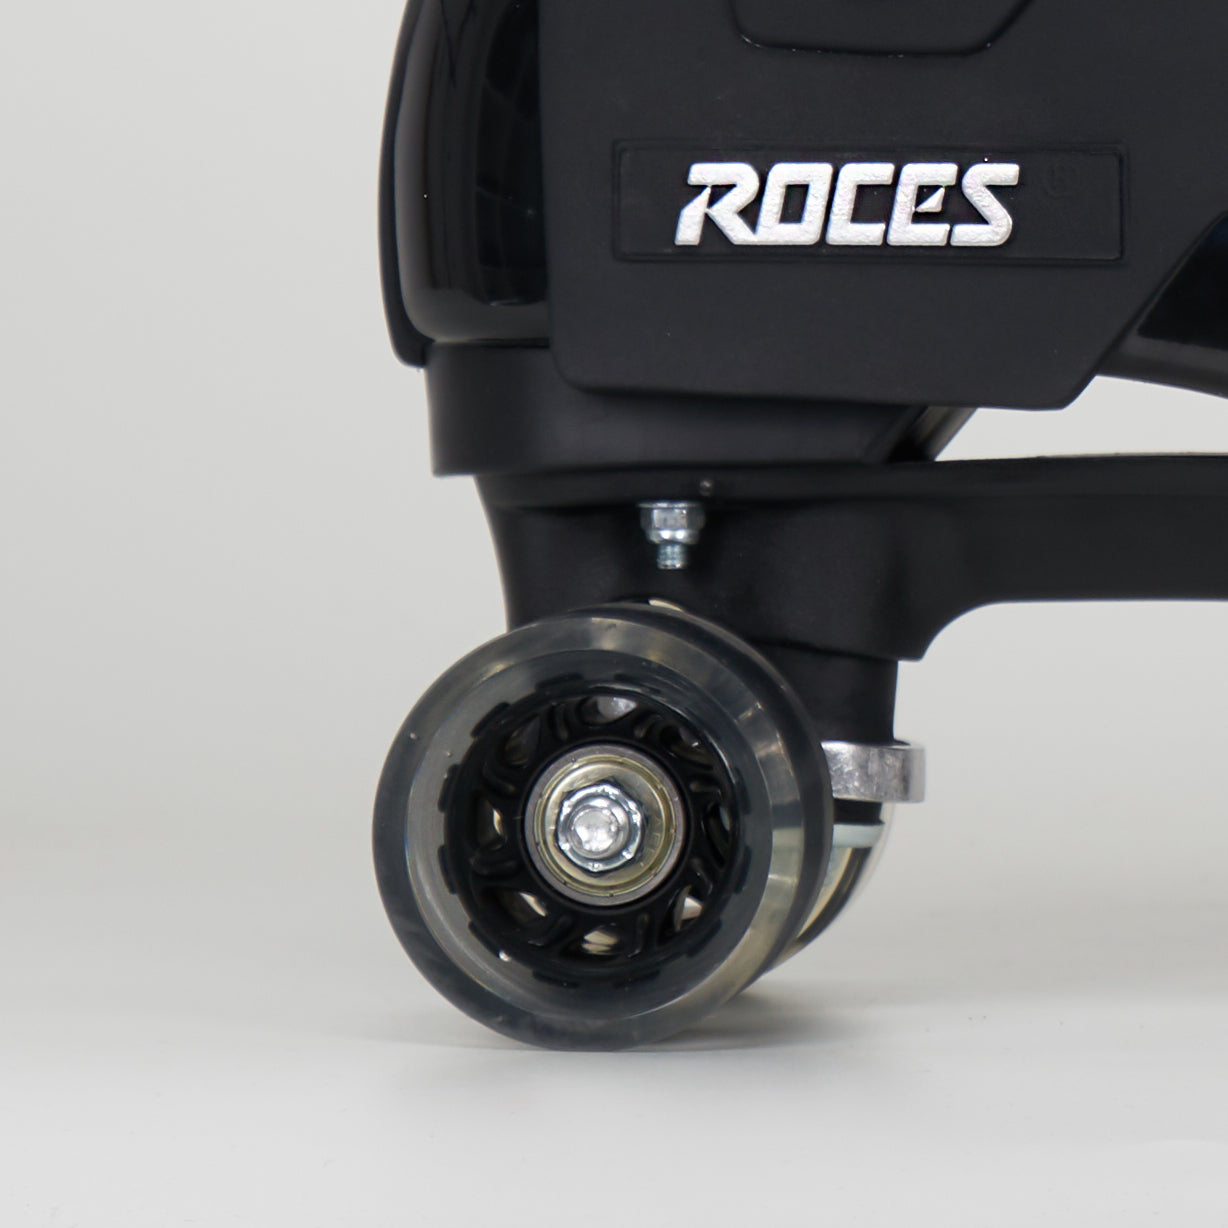 Roces Pro 80 Black Quad Skates